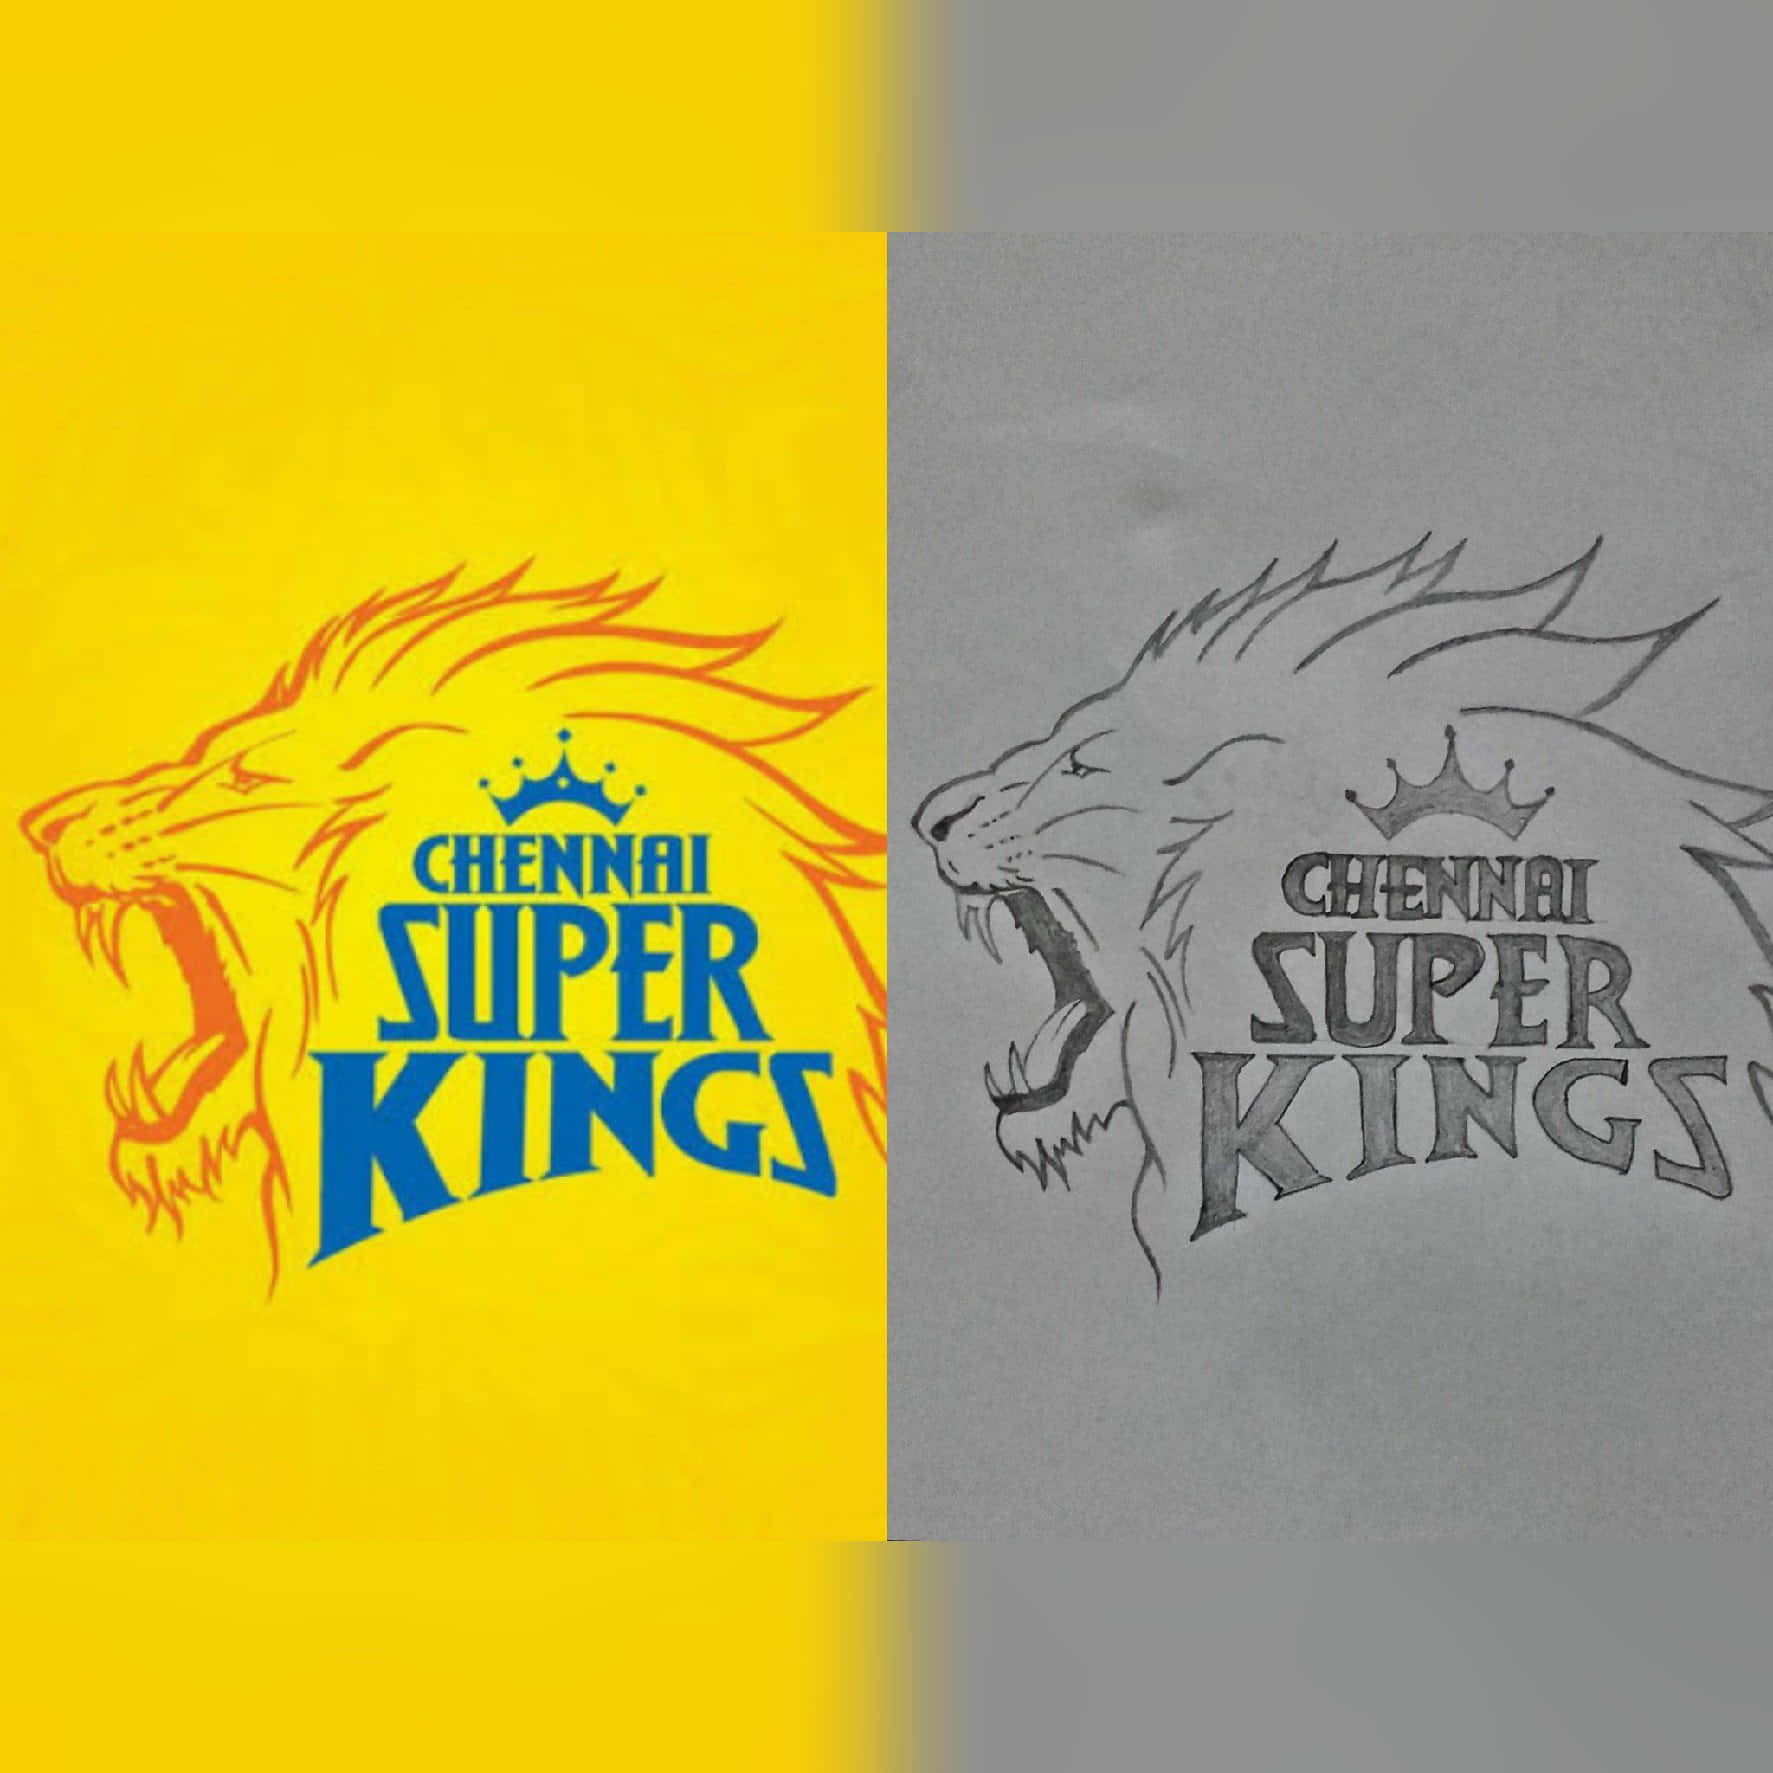 Chennai Super Kings Roaring in Full Glory